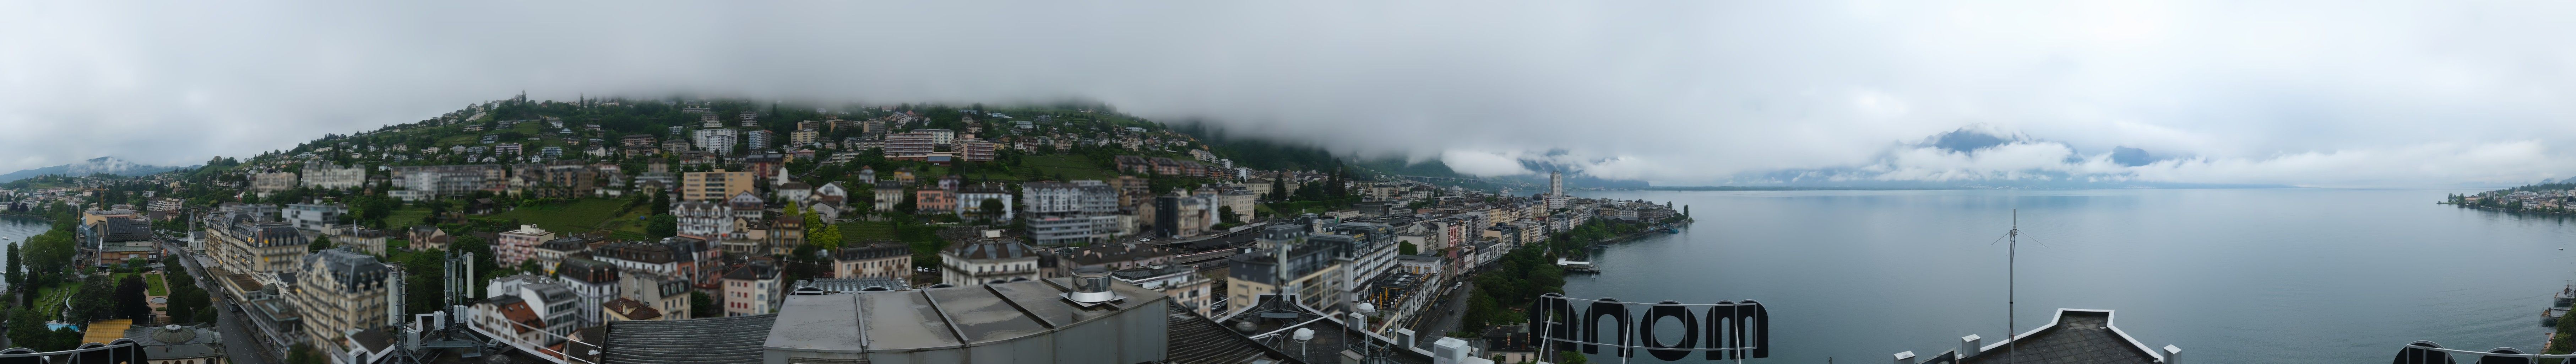 Vernex: Montreux